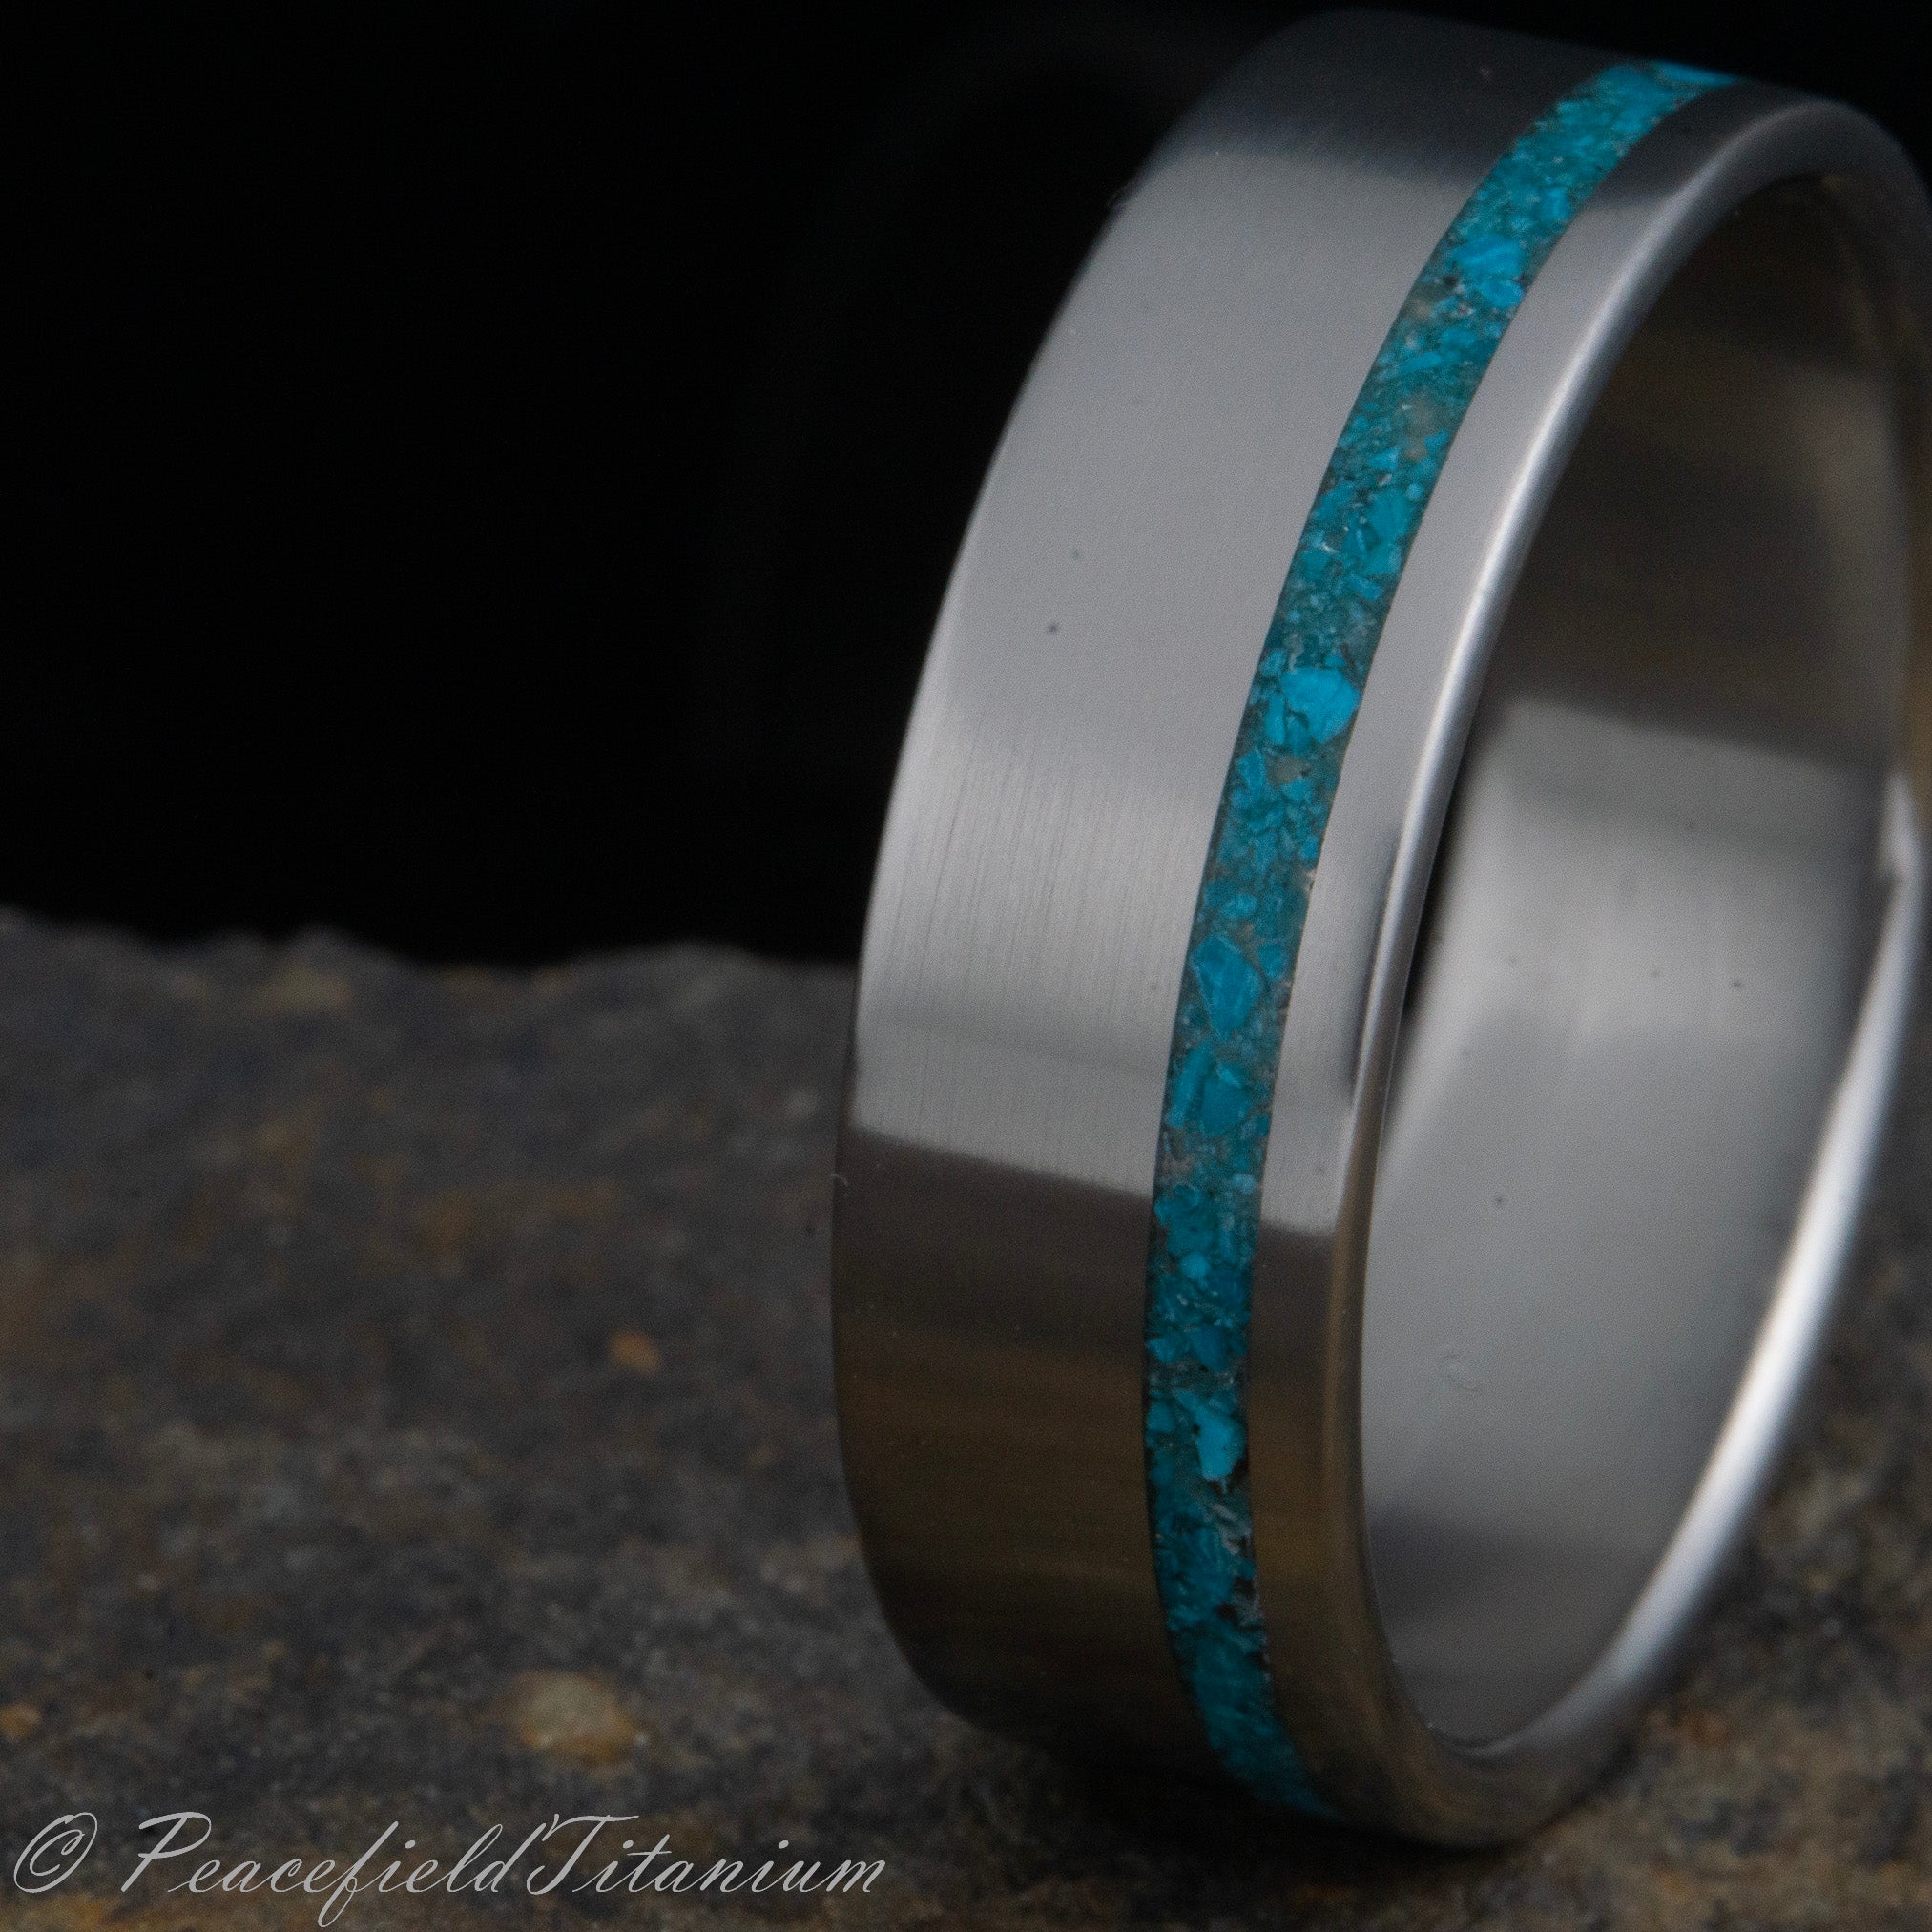 "The Bermuda" stunning turquoise ring